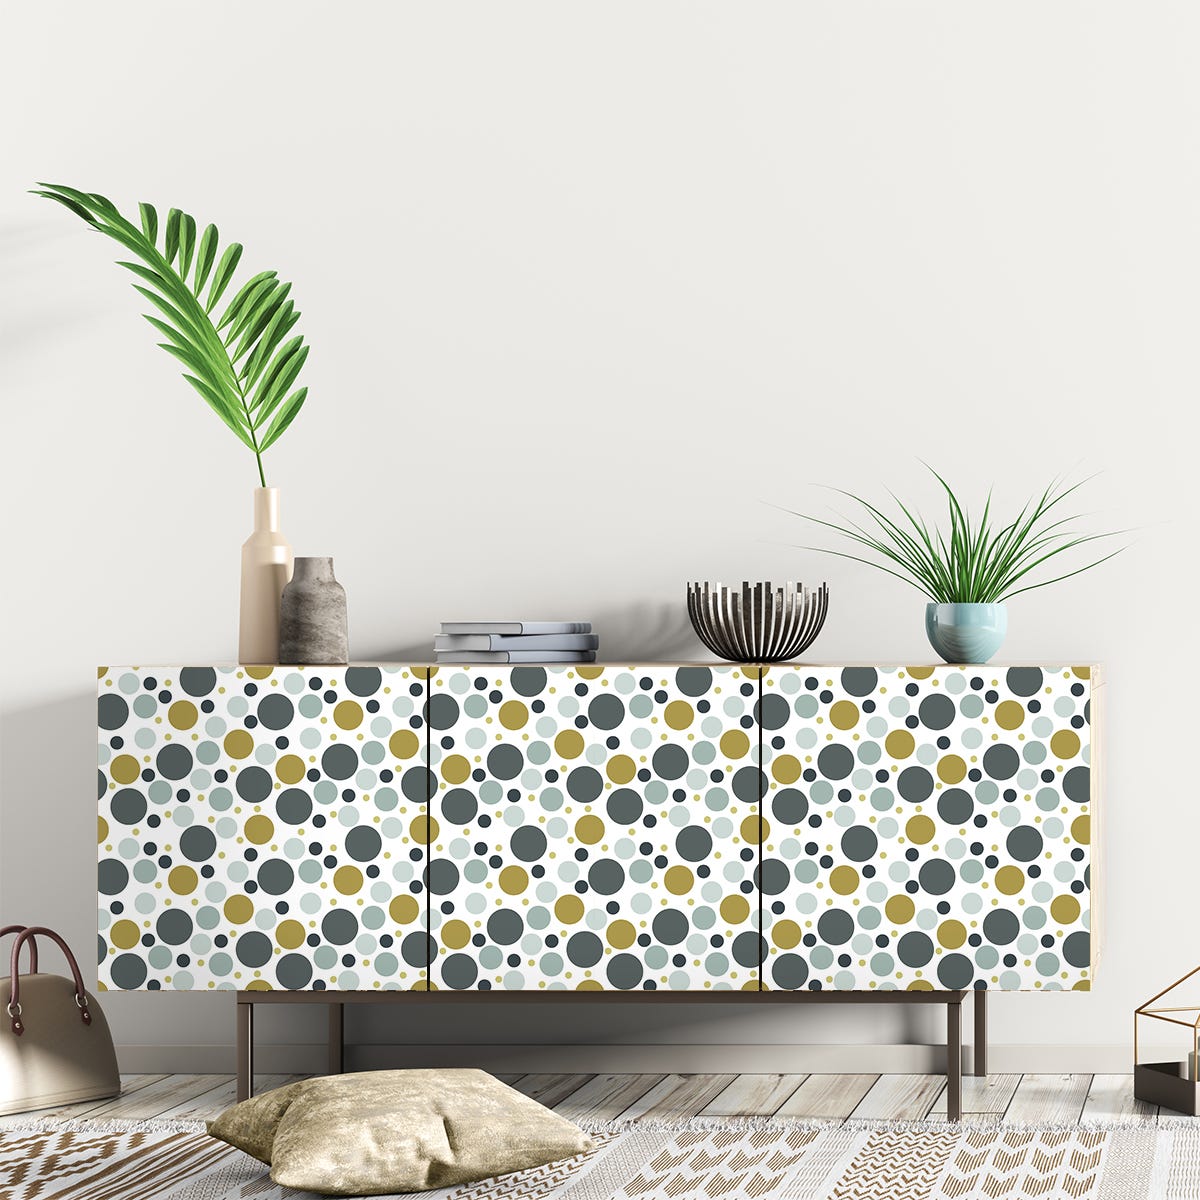 Vinilo escandinavo para muebles akob - adhesivo de pared - revestimiento  sticker mural decorativo - 60x90cm